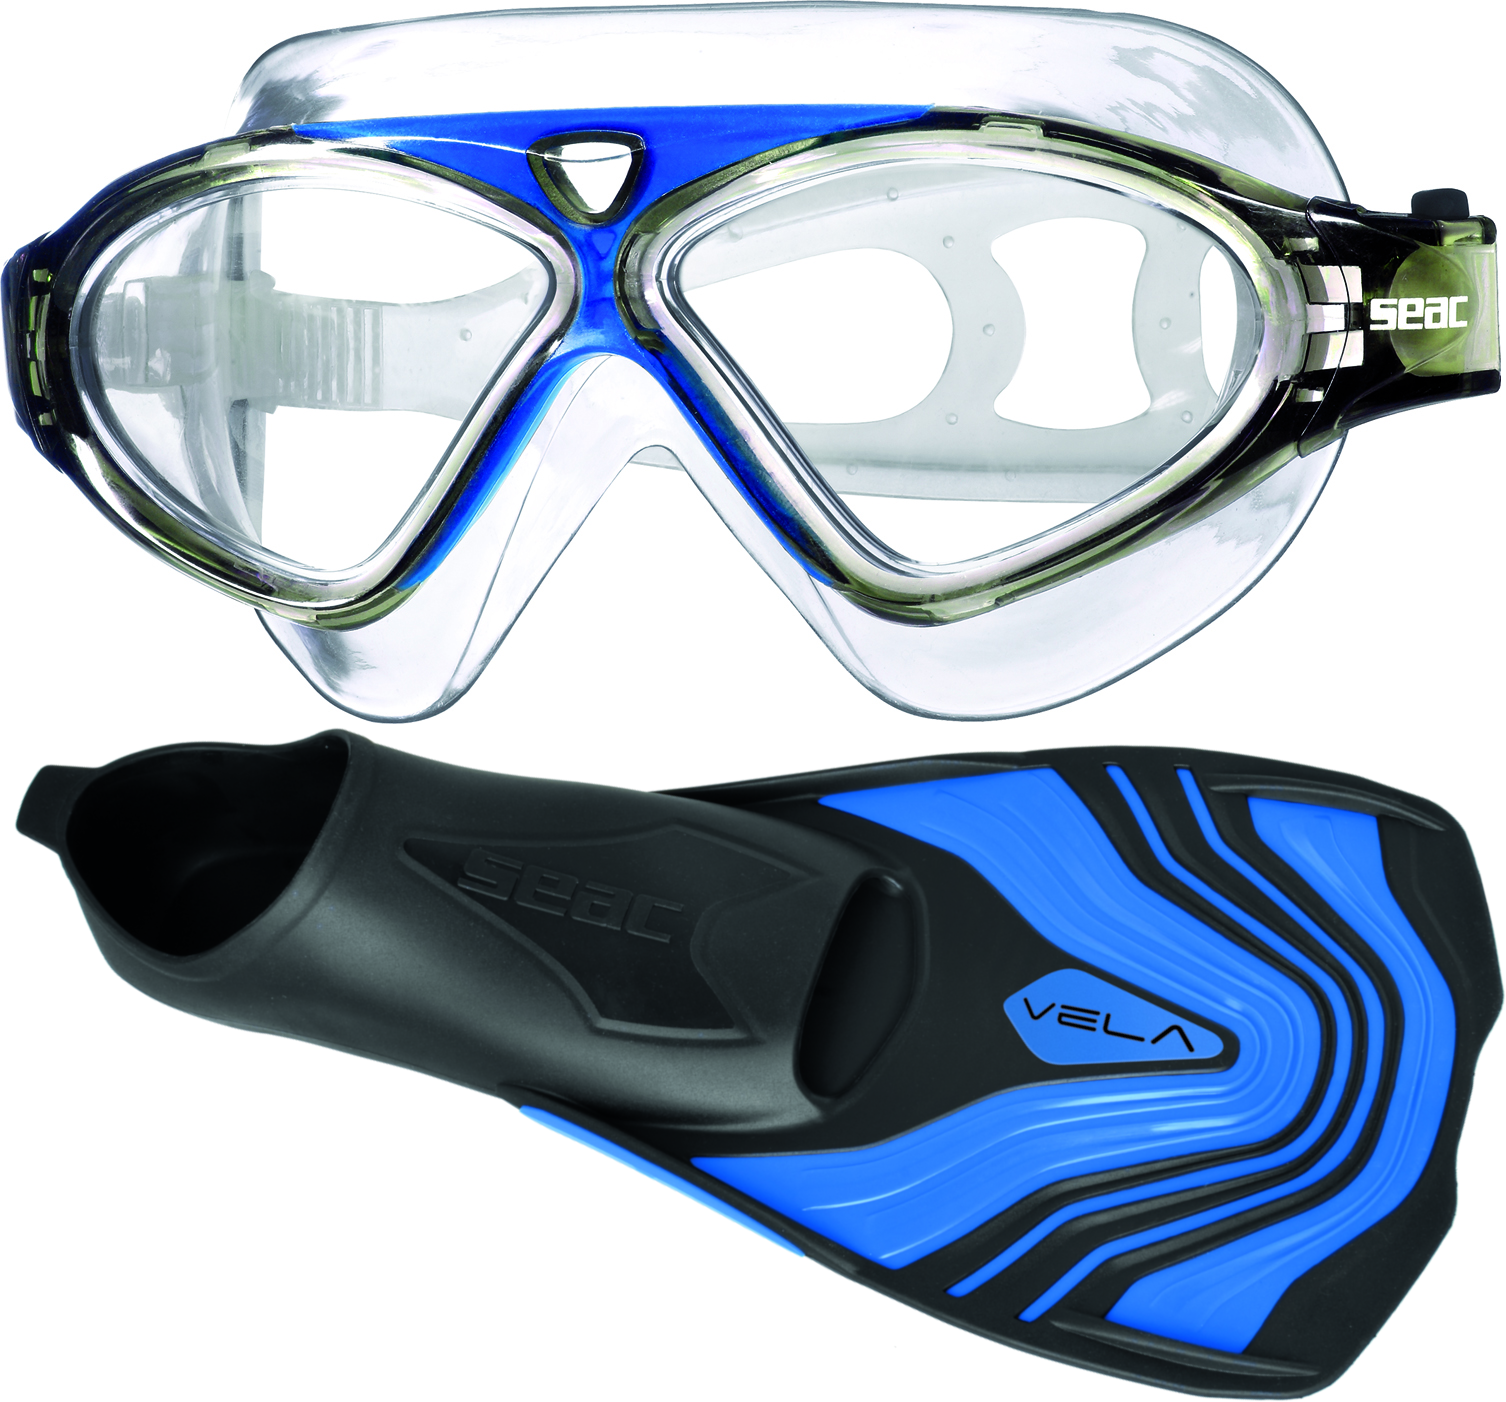 Seac Vision HD Goggles and Vela Fins